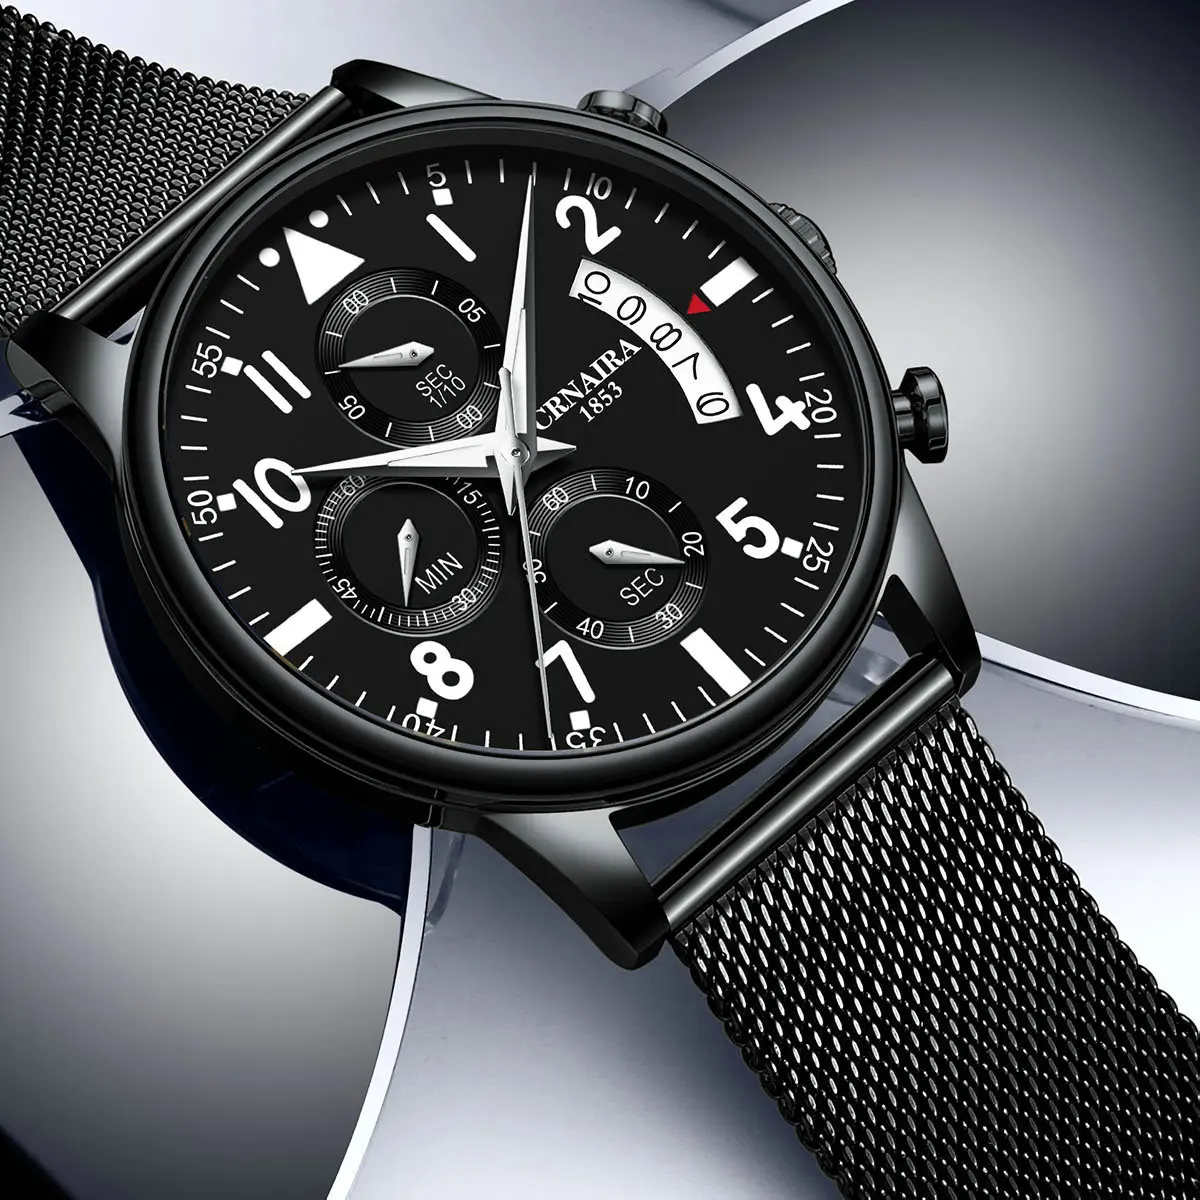 Relojes 2019 часы мужские деловые модные кварцевые часы мужские s часы Лидирующий бренд водонепроницаемые хронограф часы Relogio Masculino